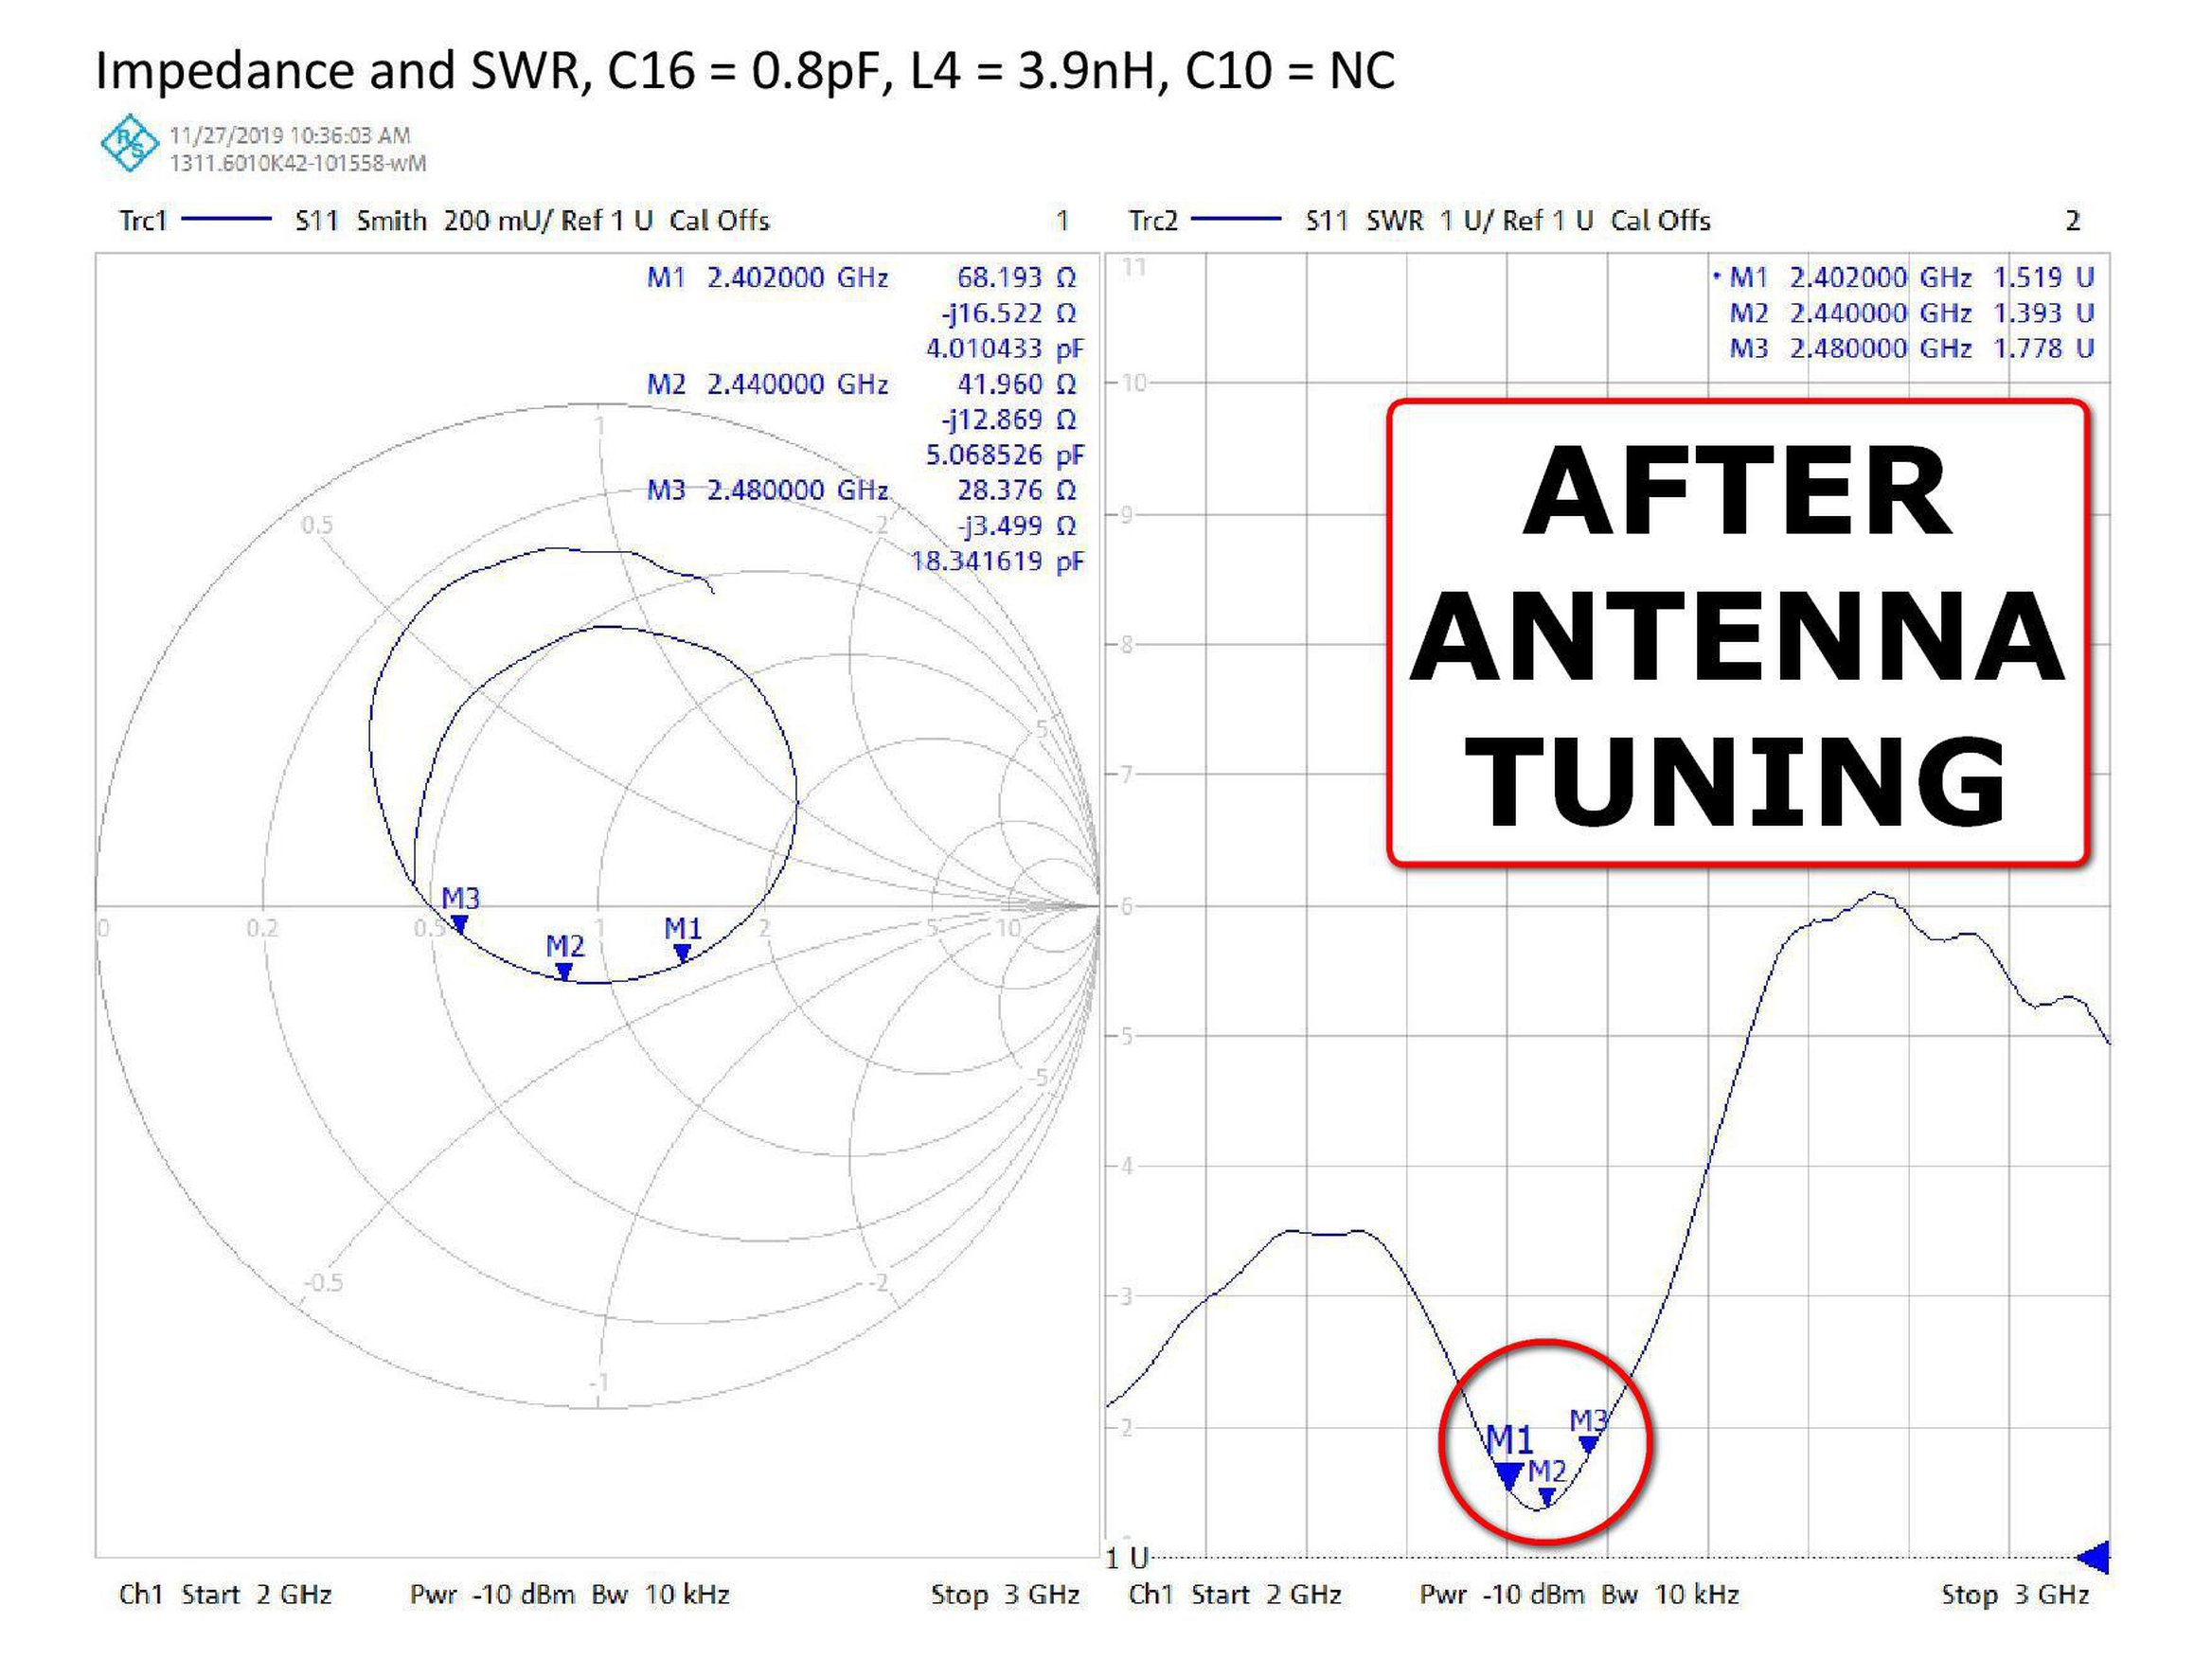 Pro Mini nRF52: After Antenna Tuning...